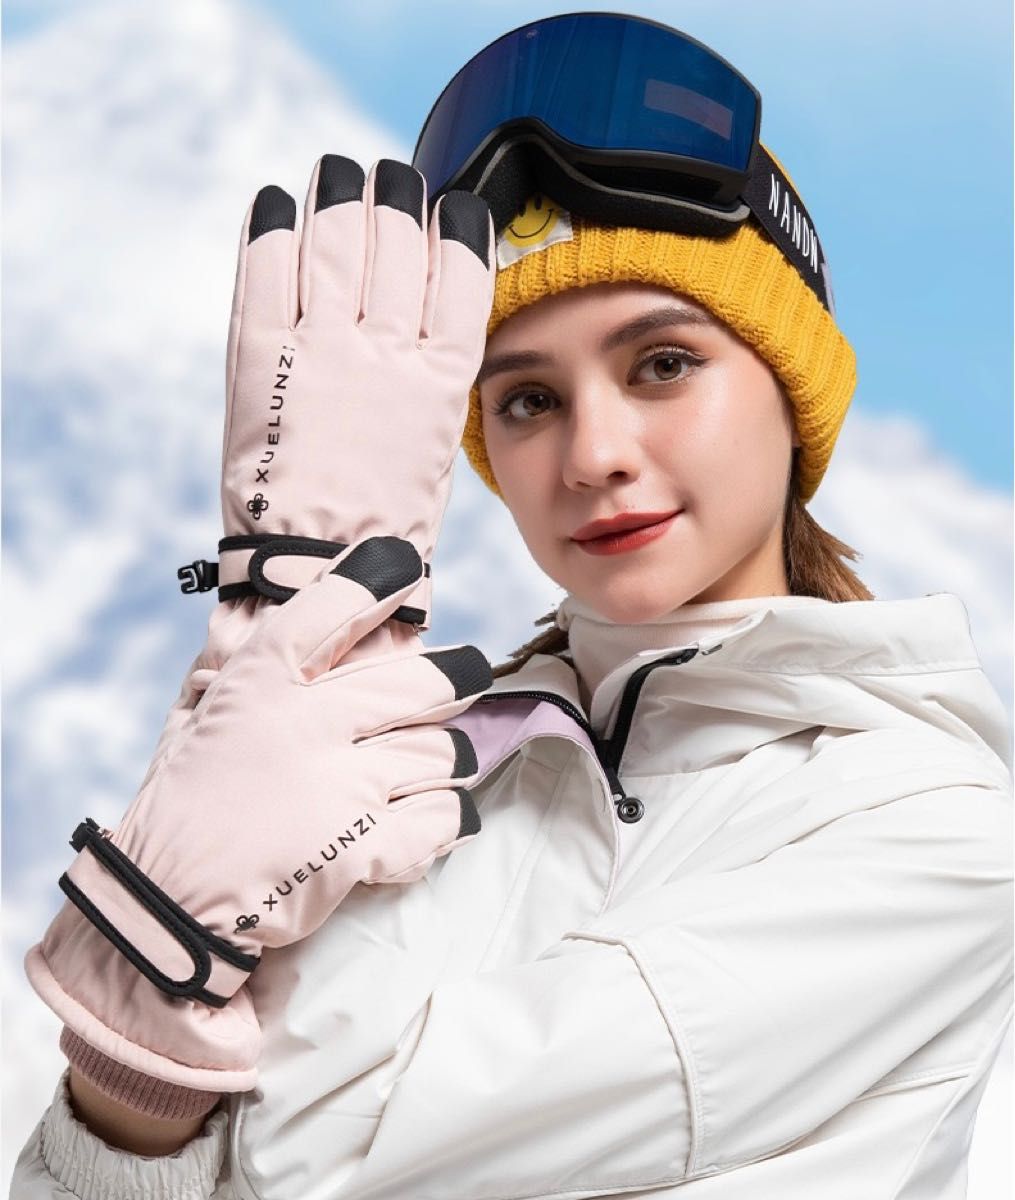 Tripee スキーグローブ スノーボードグローブ タッチパネル対応 防寒 耐水性 防風 冬手袋 雪かき手袋 保温 通気 滑り止め付き 登山 男女兼用